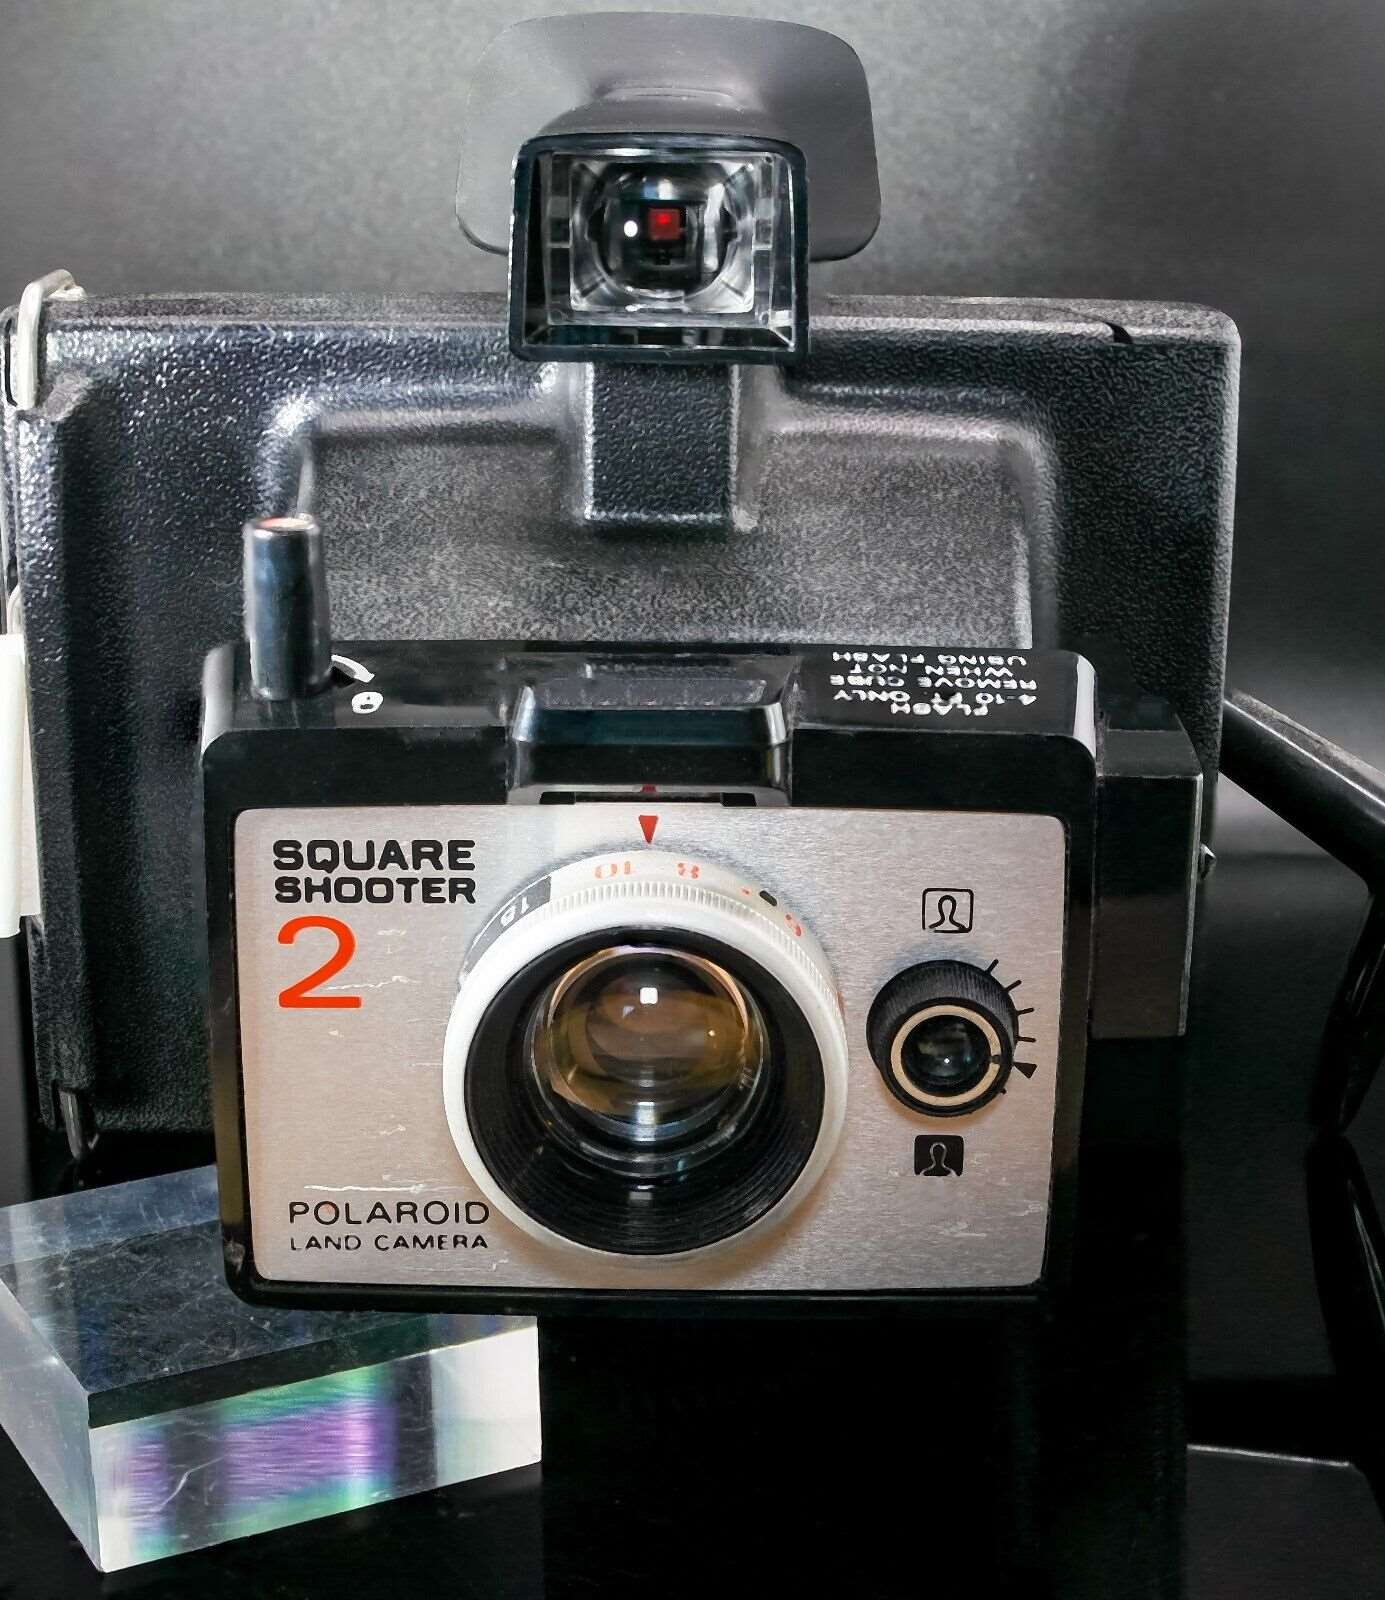 Camera Polaroid Square Shooter 2 Instant Film Photo Camera Collectors Piece